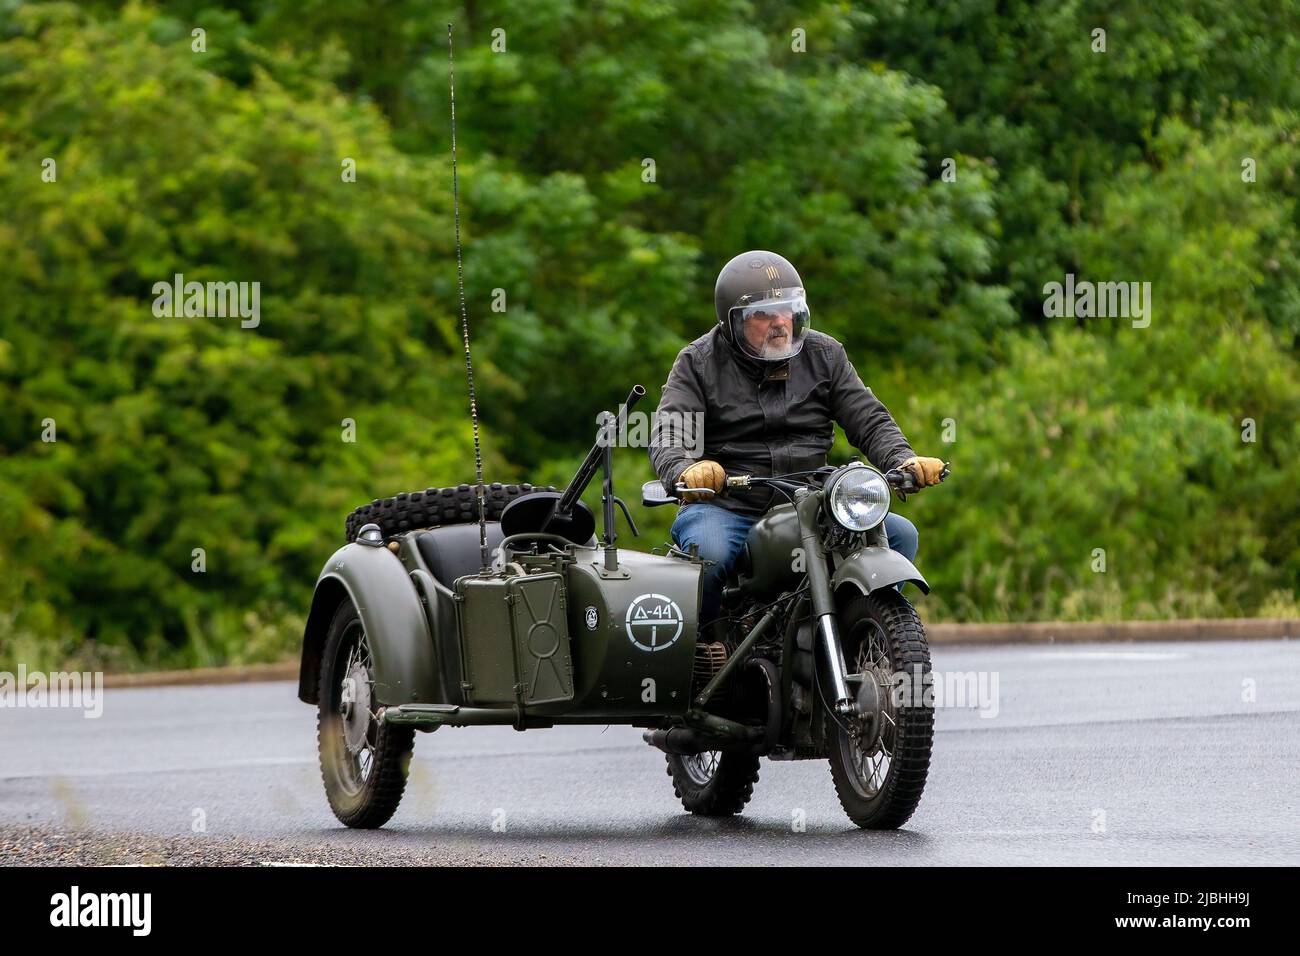 DNEPR K750 a sidecar motorcycle, built in Ukraine Stock Photo